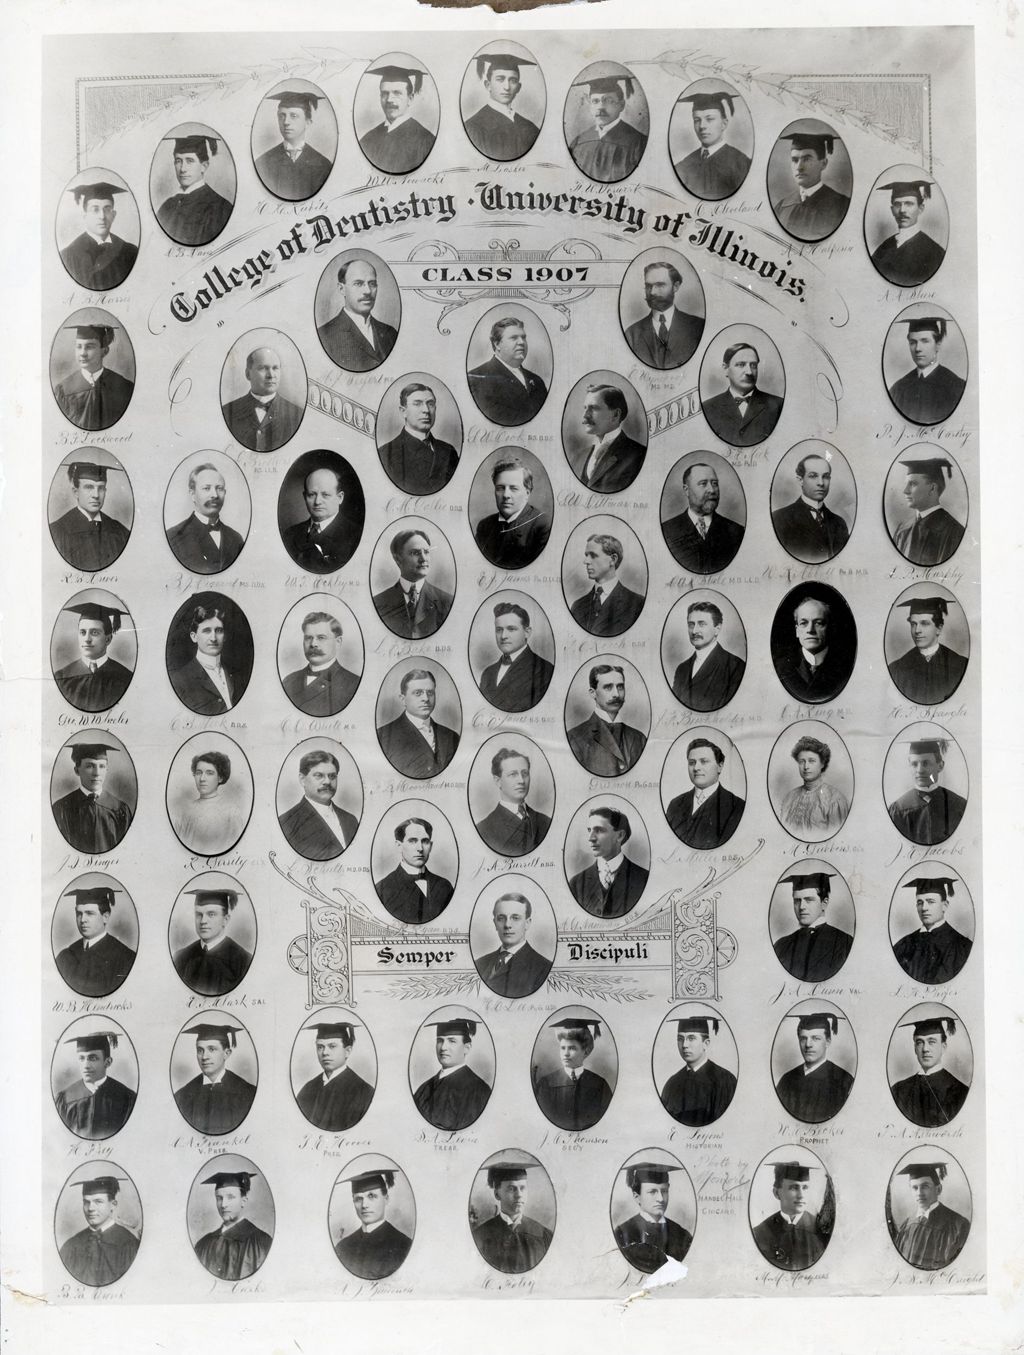 Miniature of 1907 graduating class, University of Illinois College of Dentistry